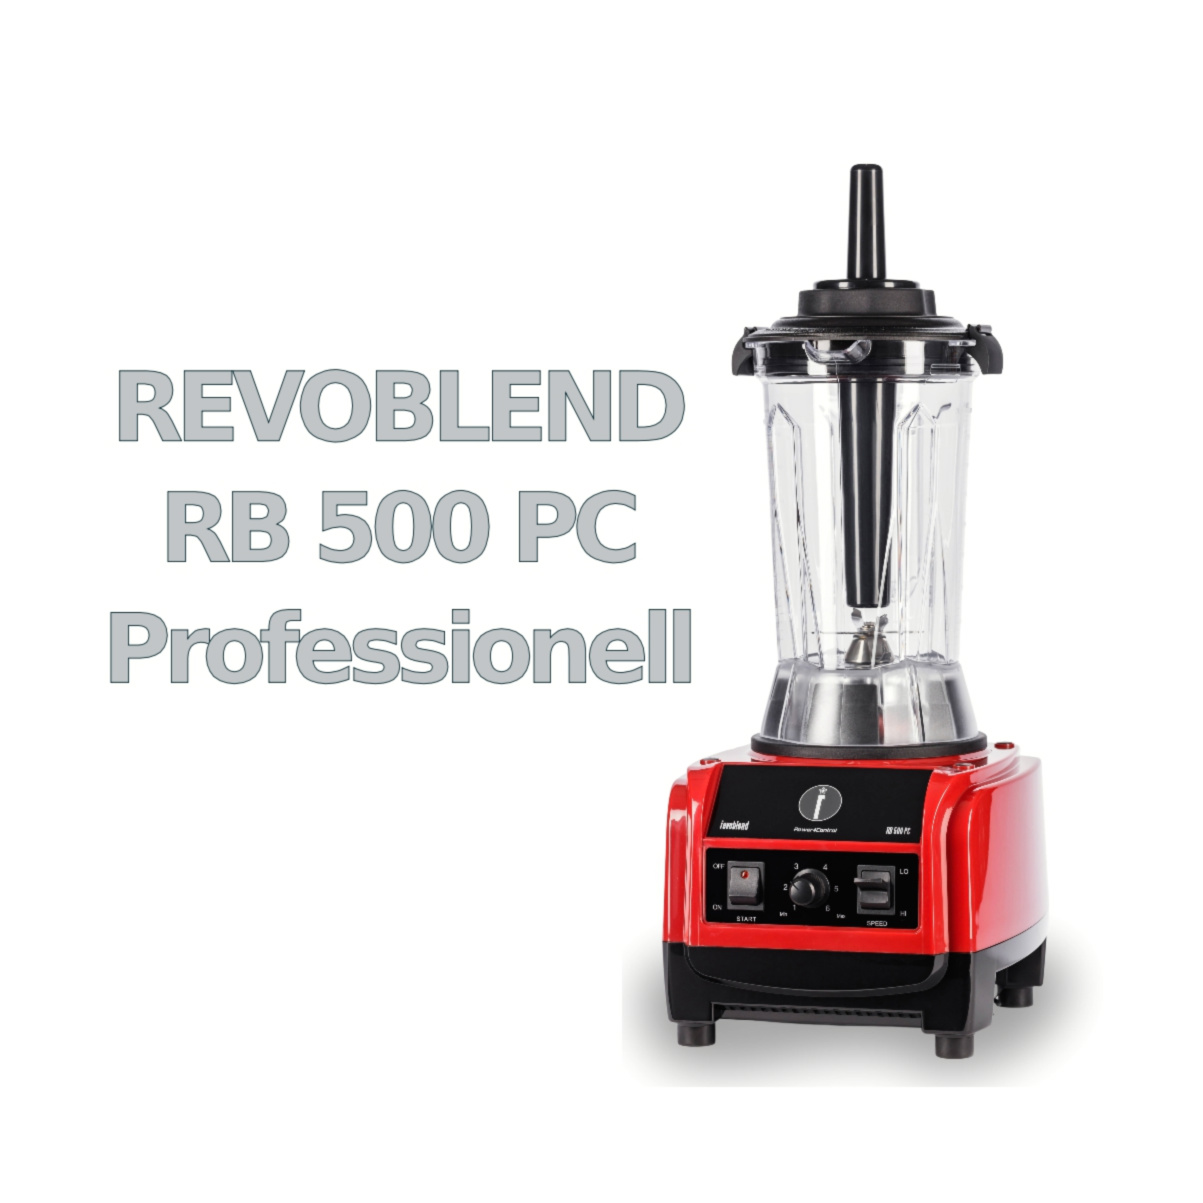 Neues Modell: Revoblend RB 500 PC Rubinrot